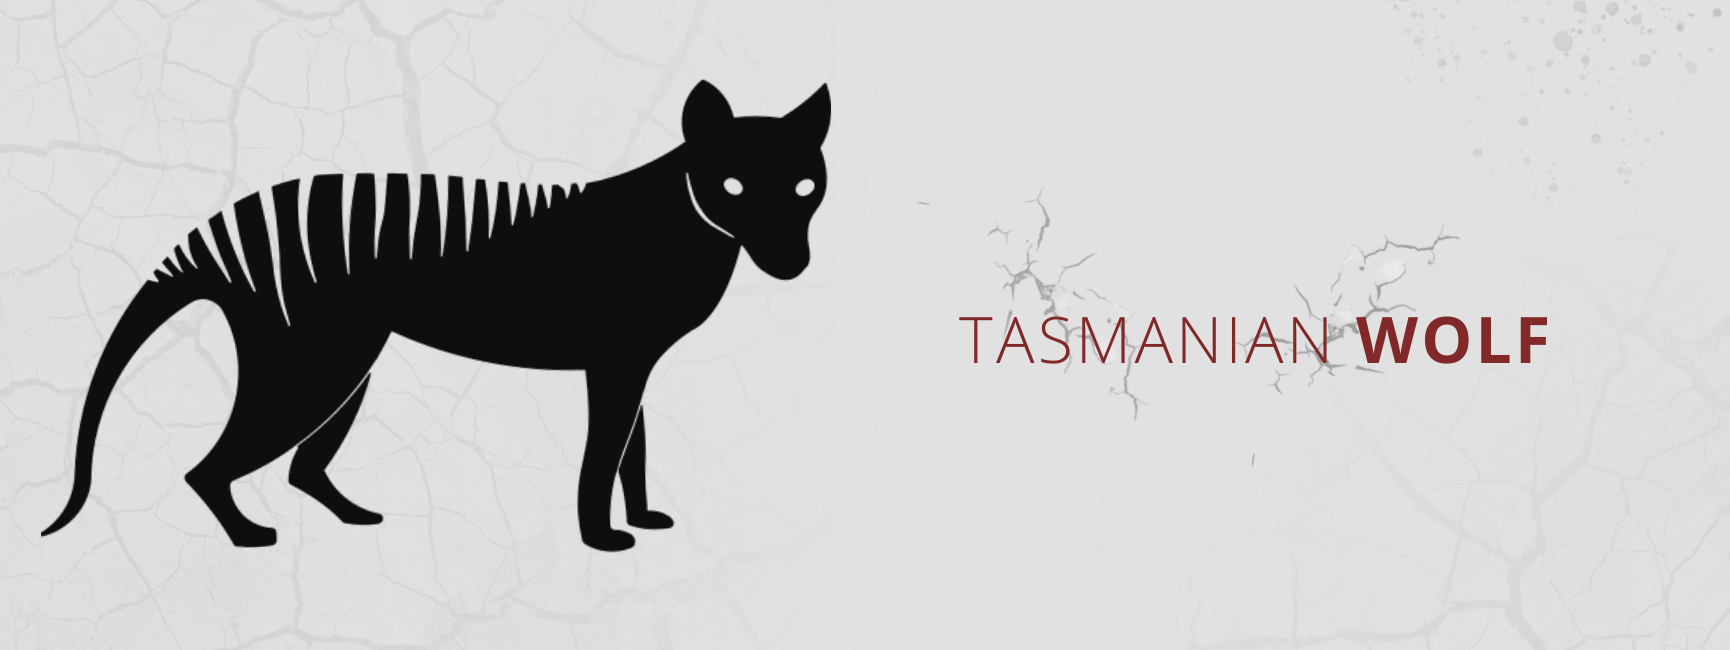 tasmanian wolf characteristics